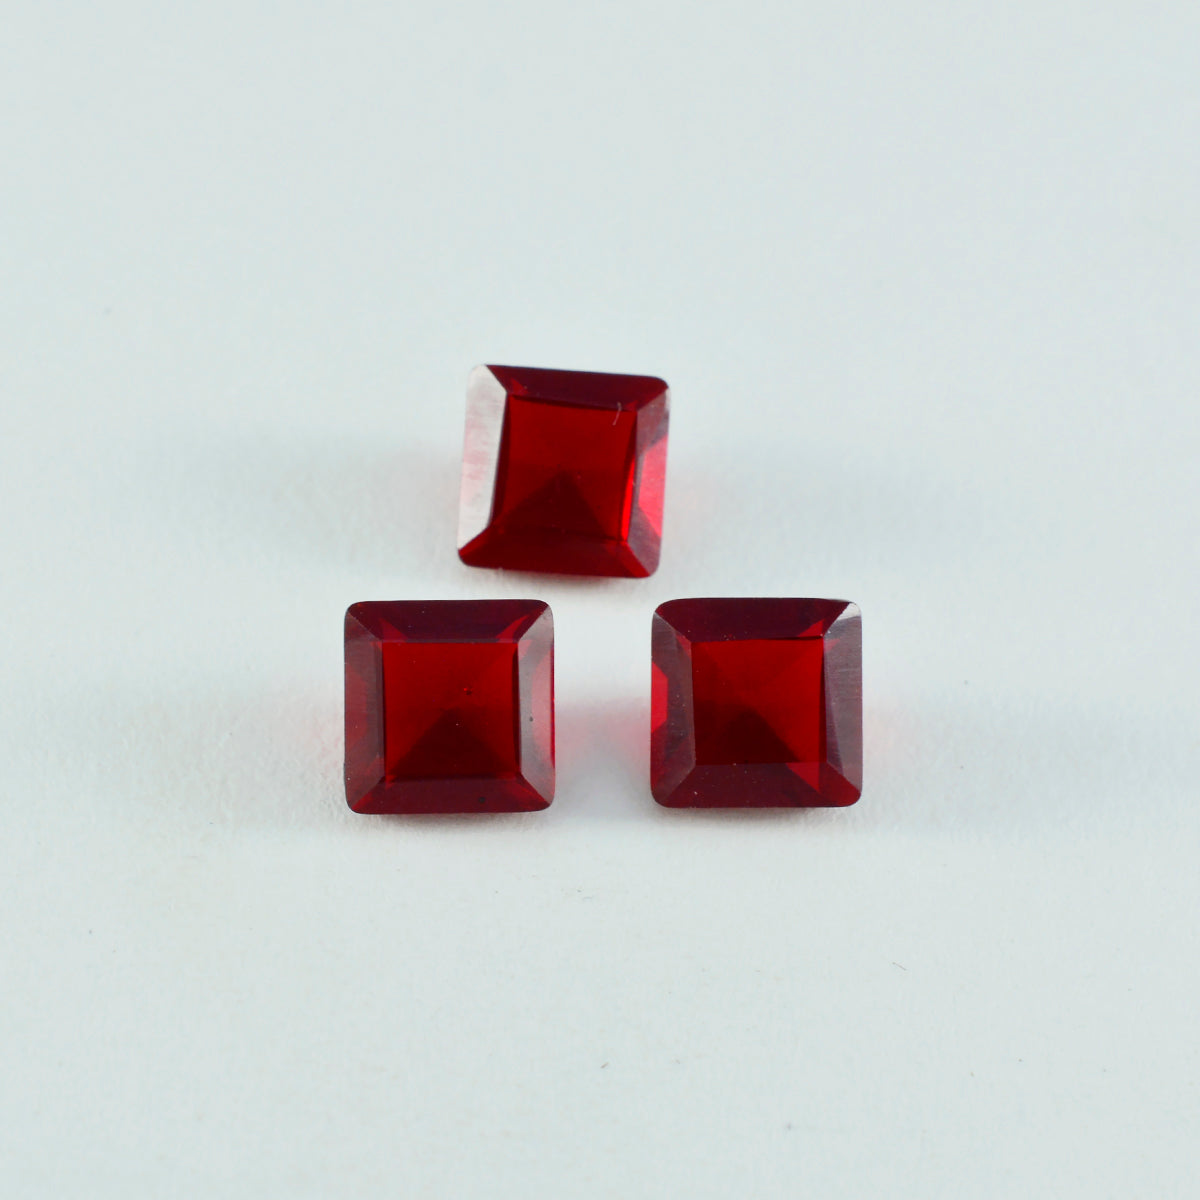 Riyogems 1PC Red Ruby CZ Faceted 9x9 mm Square Shape wonderful Quality Loose Gem